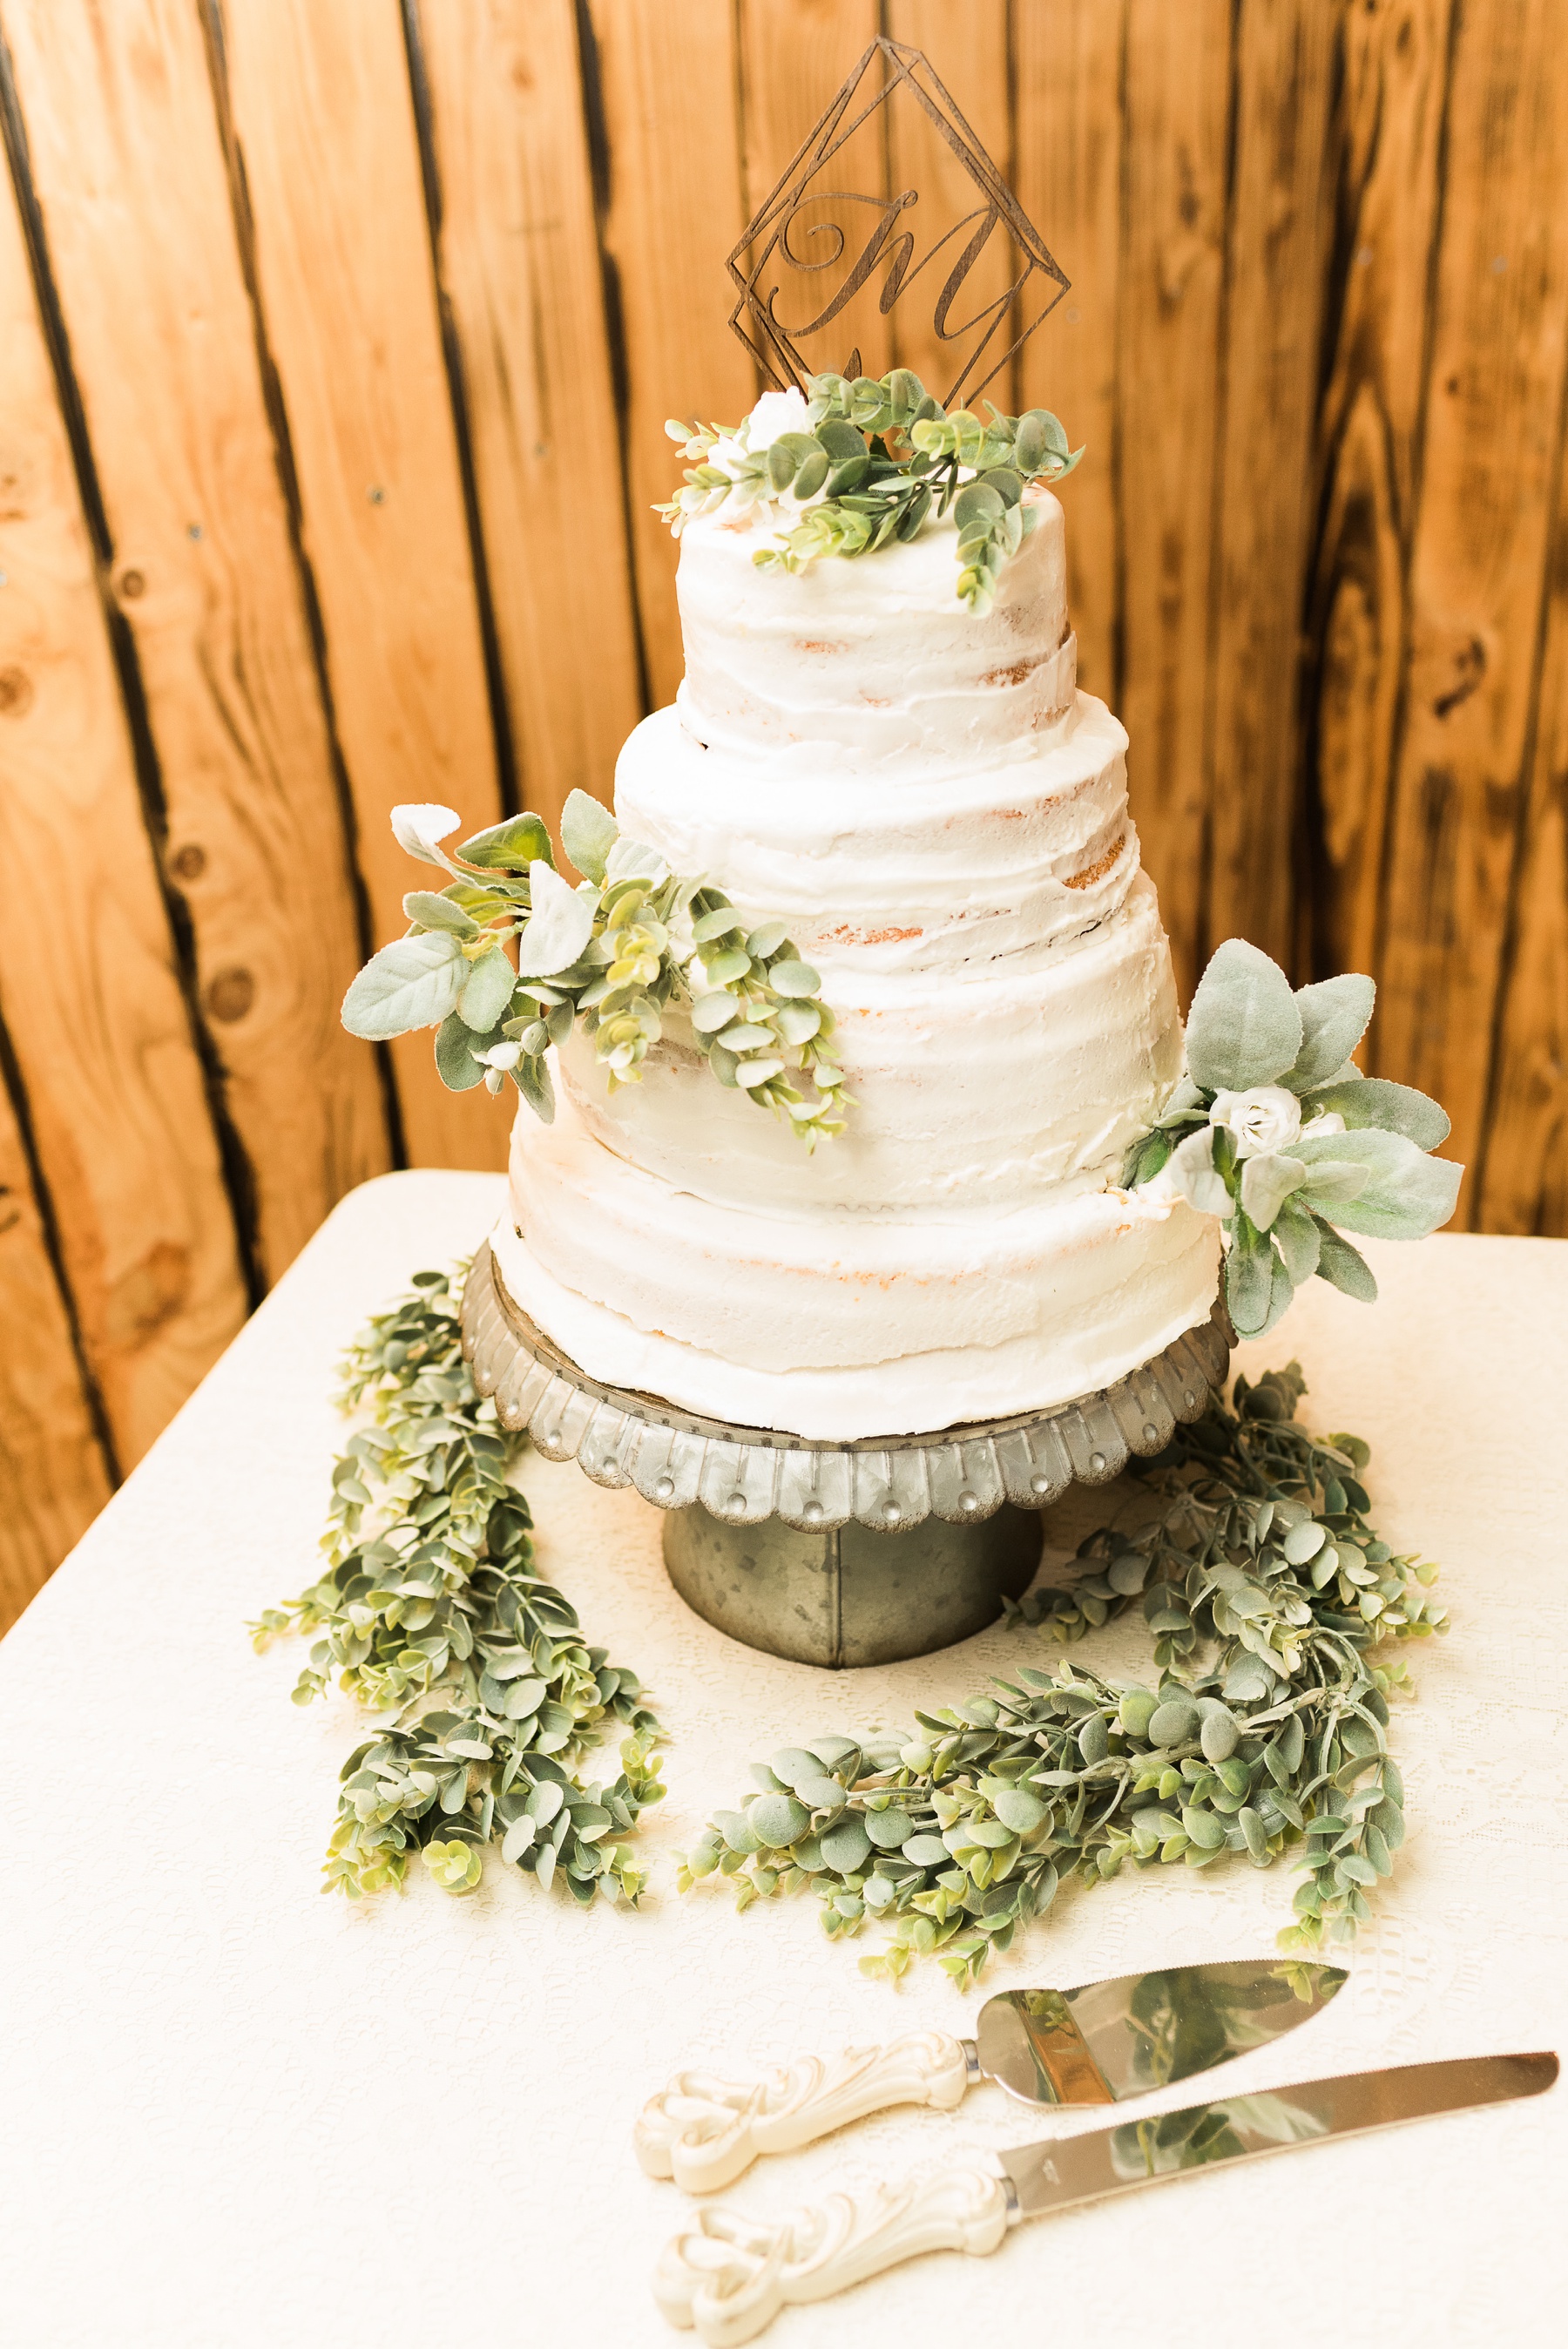 DIY Greenery Cake Decoration